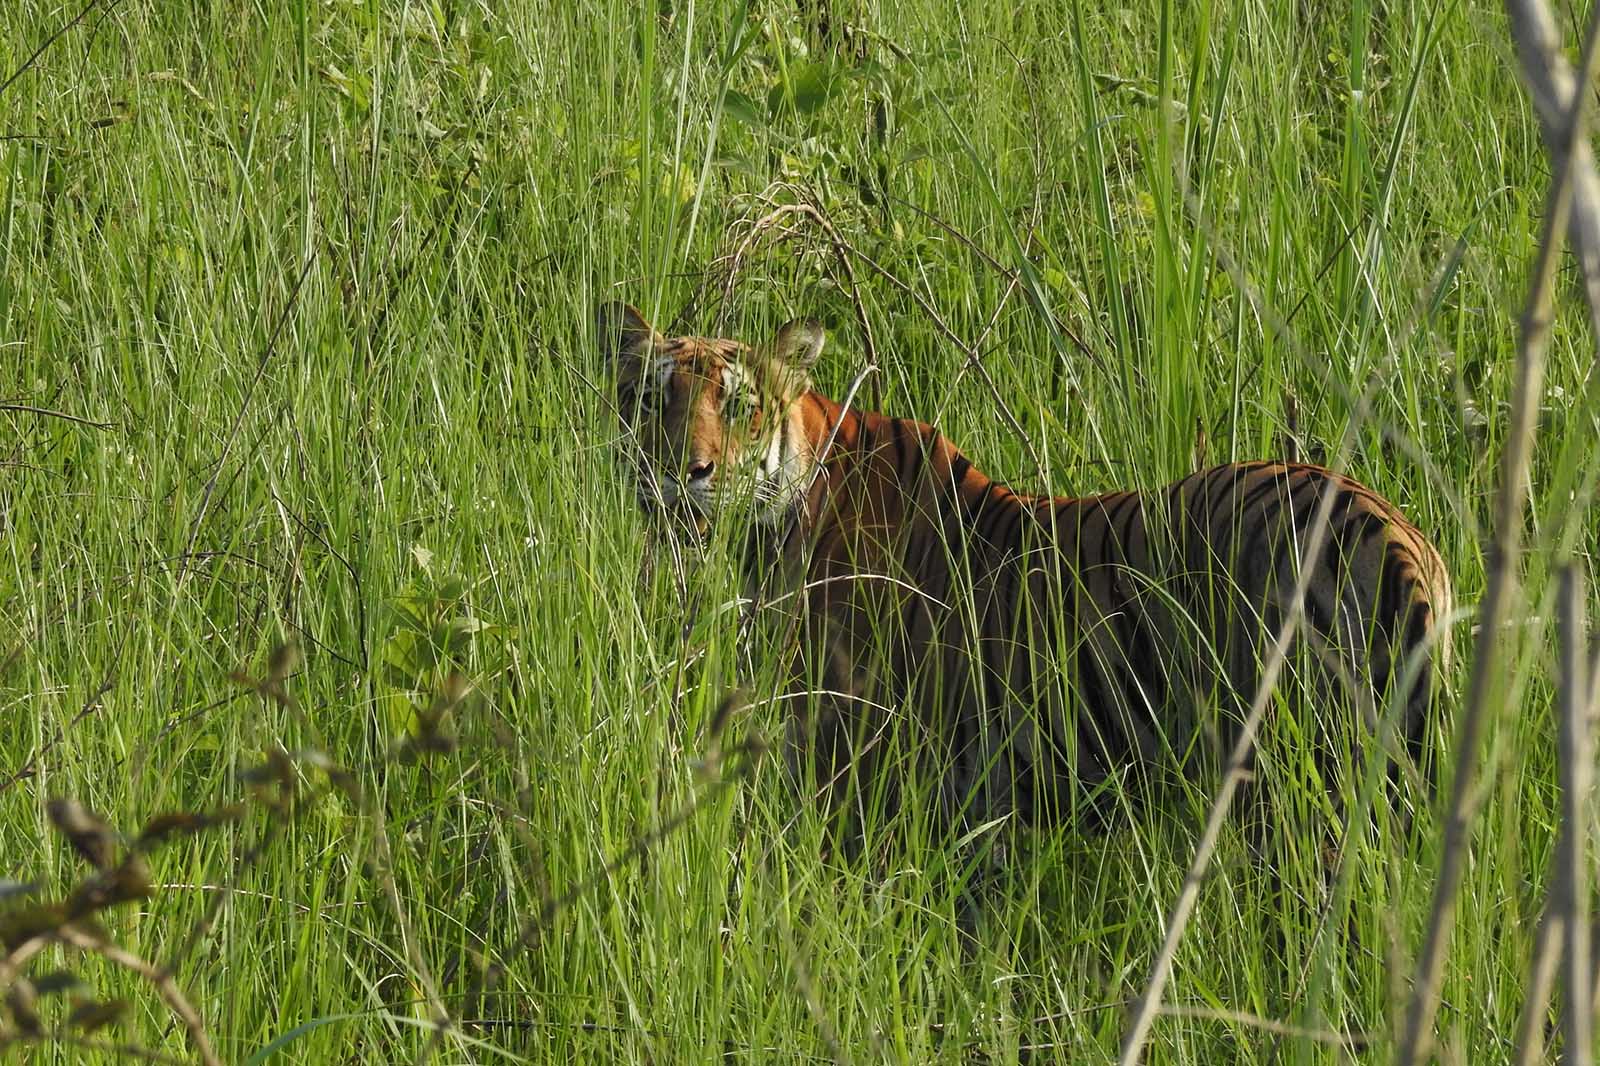 Royal Bengal tiger in Chitwan National Park, Nepal